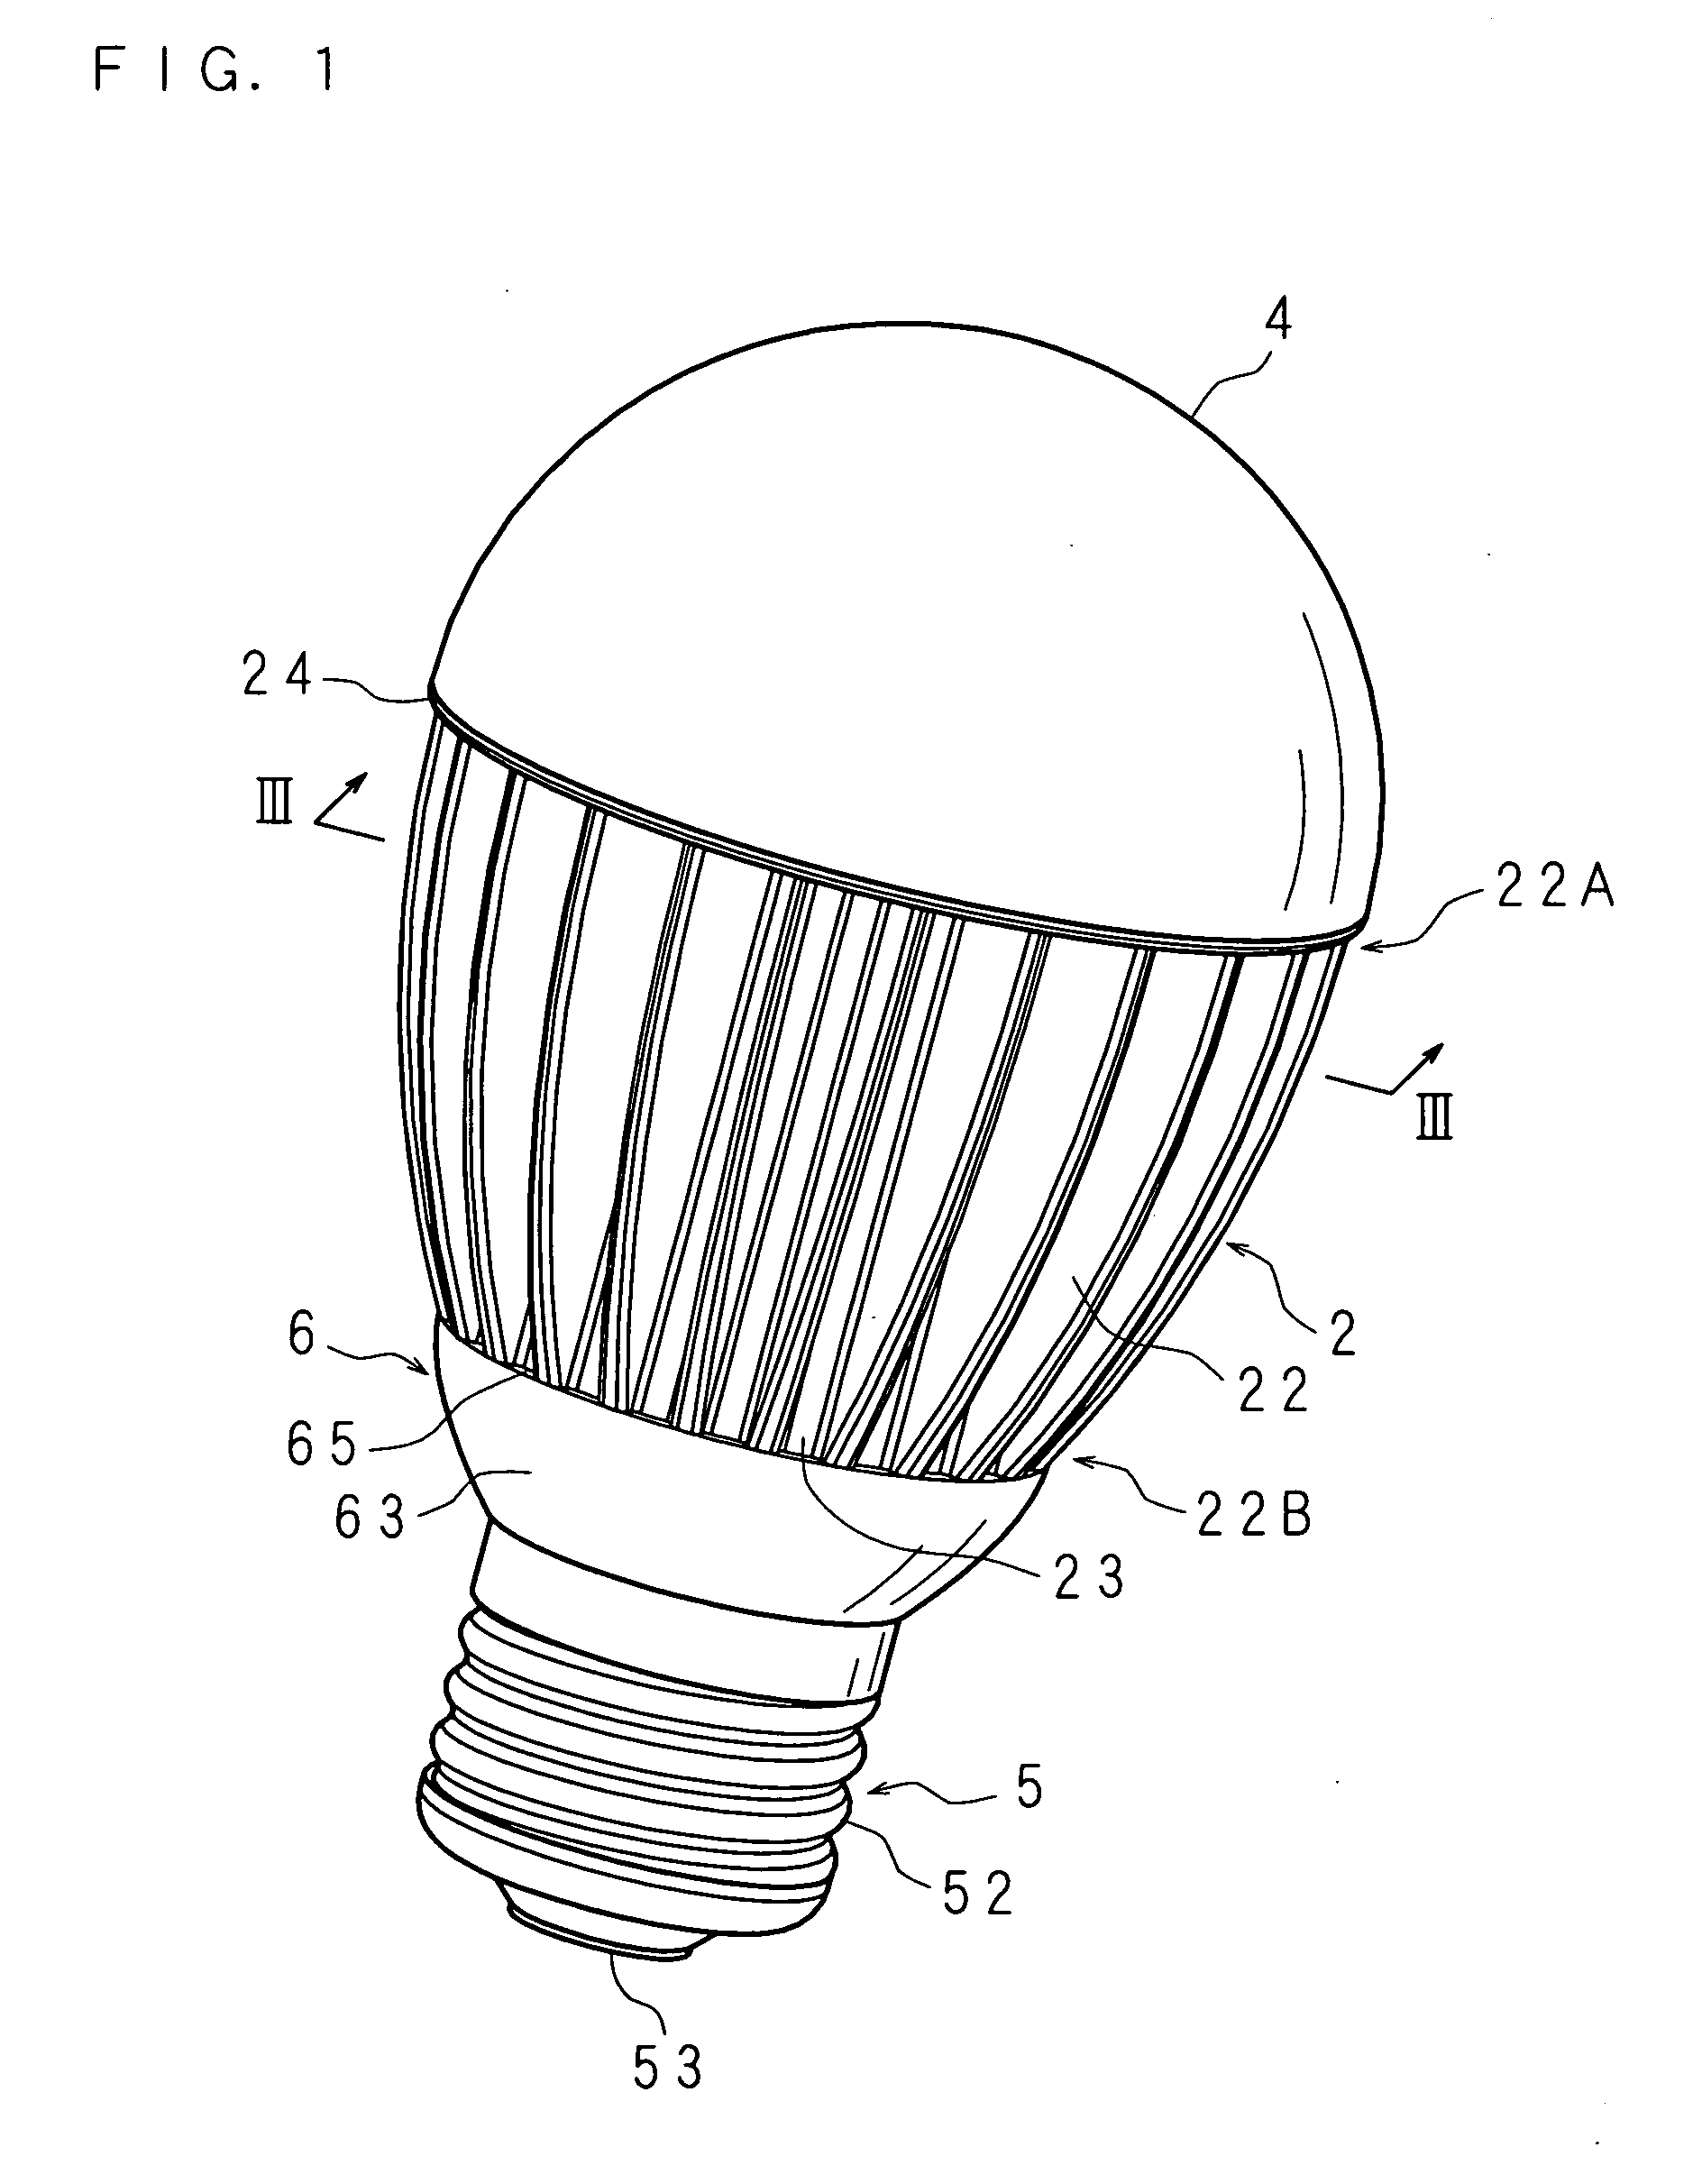 Lighting device